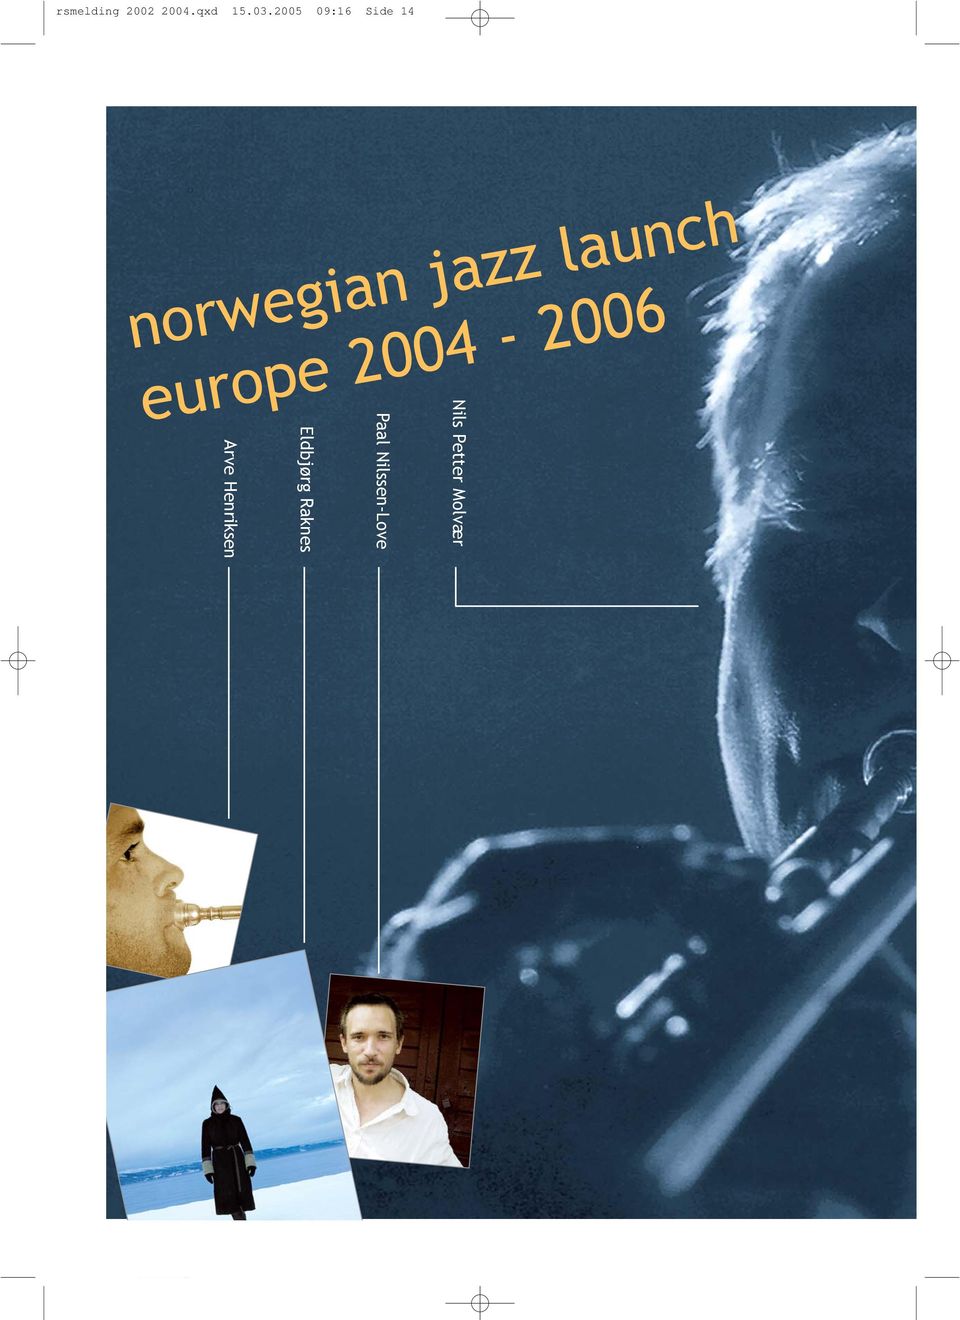 launch europe 2004-2006 Nils Petter